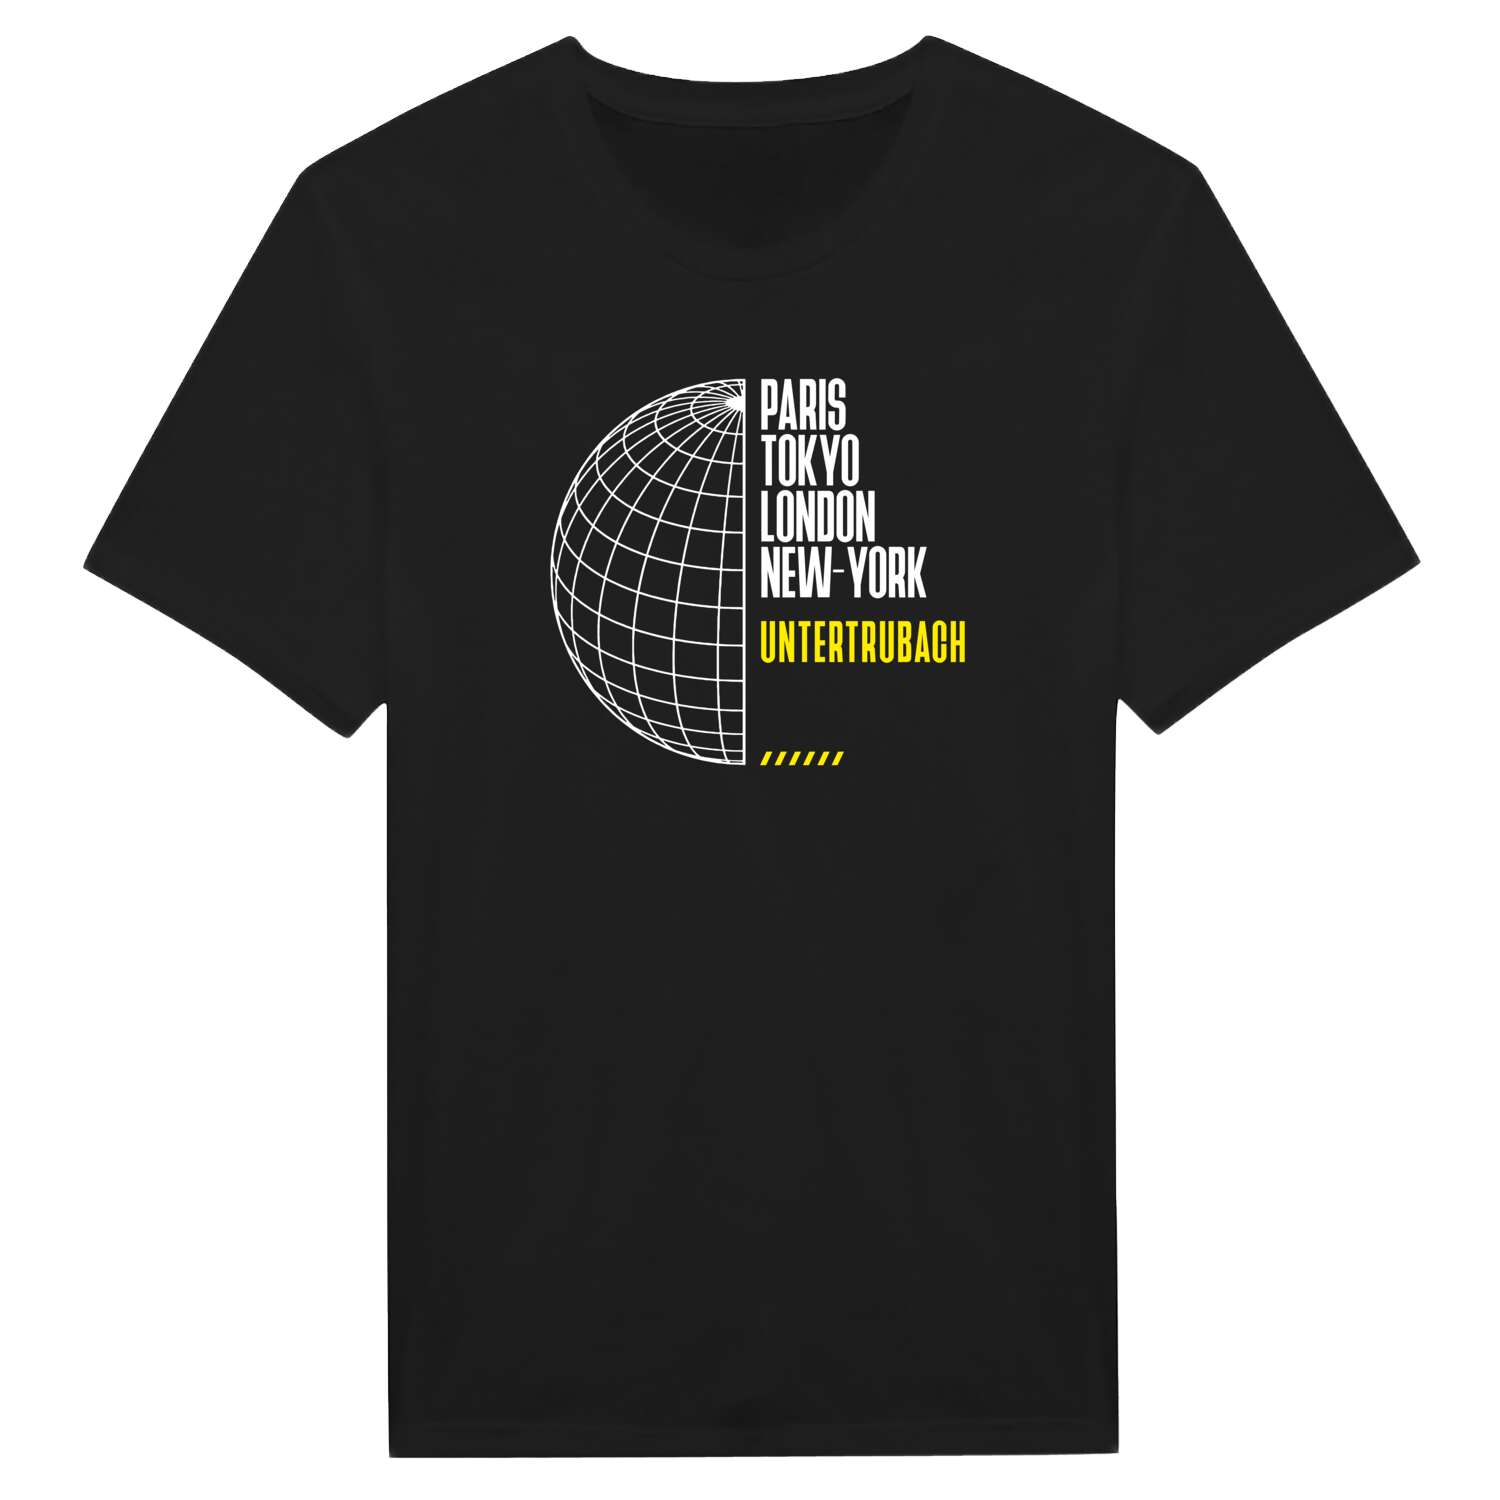 Untertrubach T-Shirt »Paris Tokyo London«